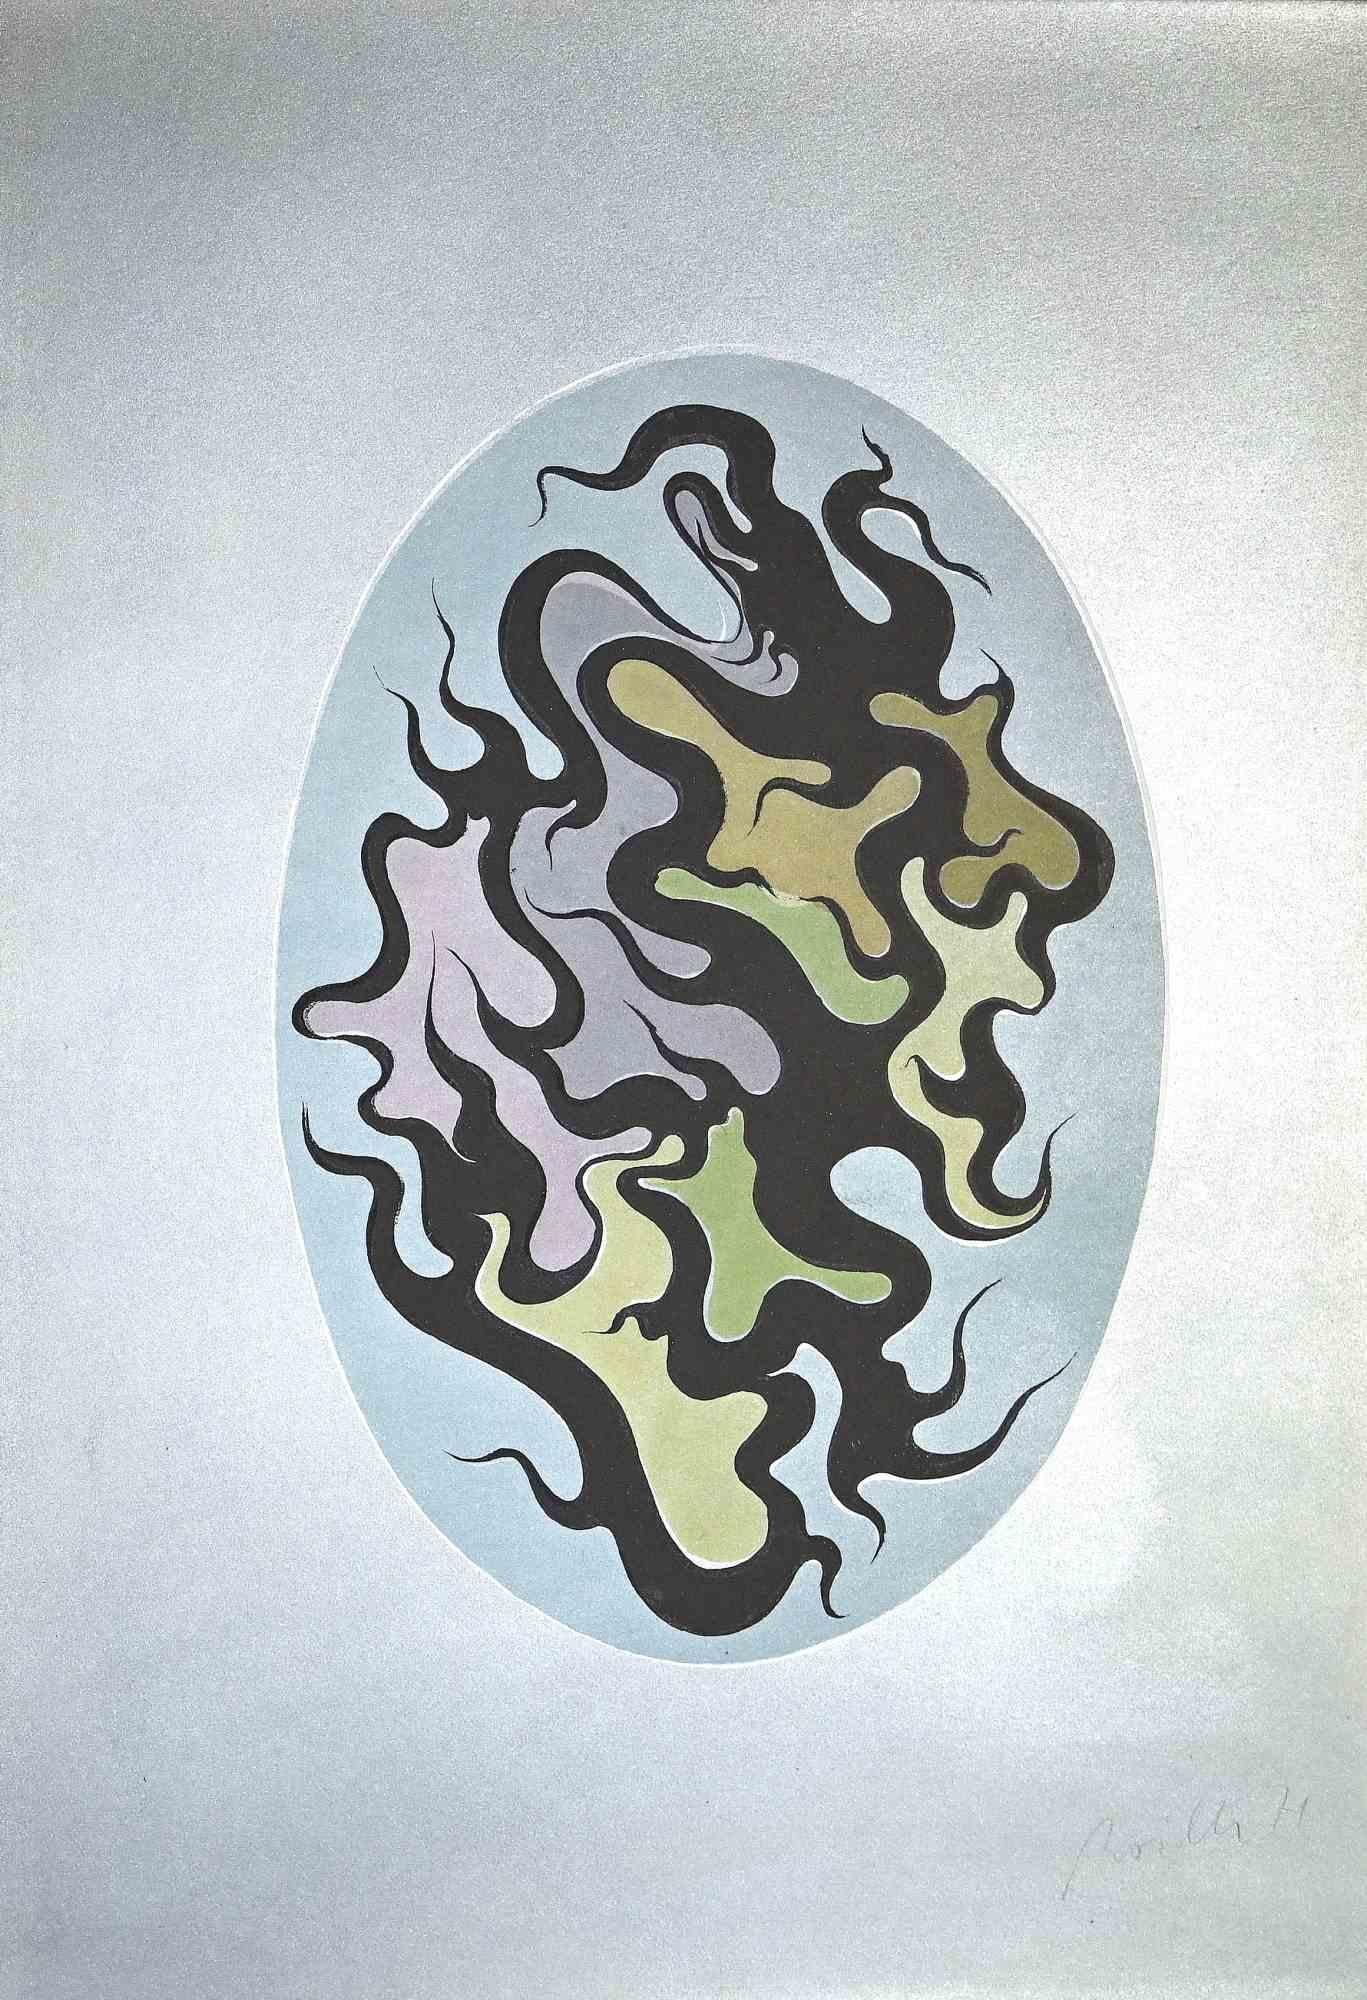 Luigi Boille Abstract Print - Composition - Screen Print by Luigi Boiille - 1971